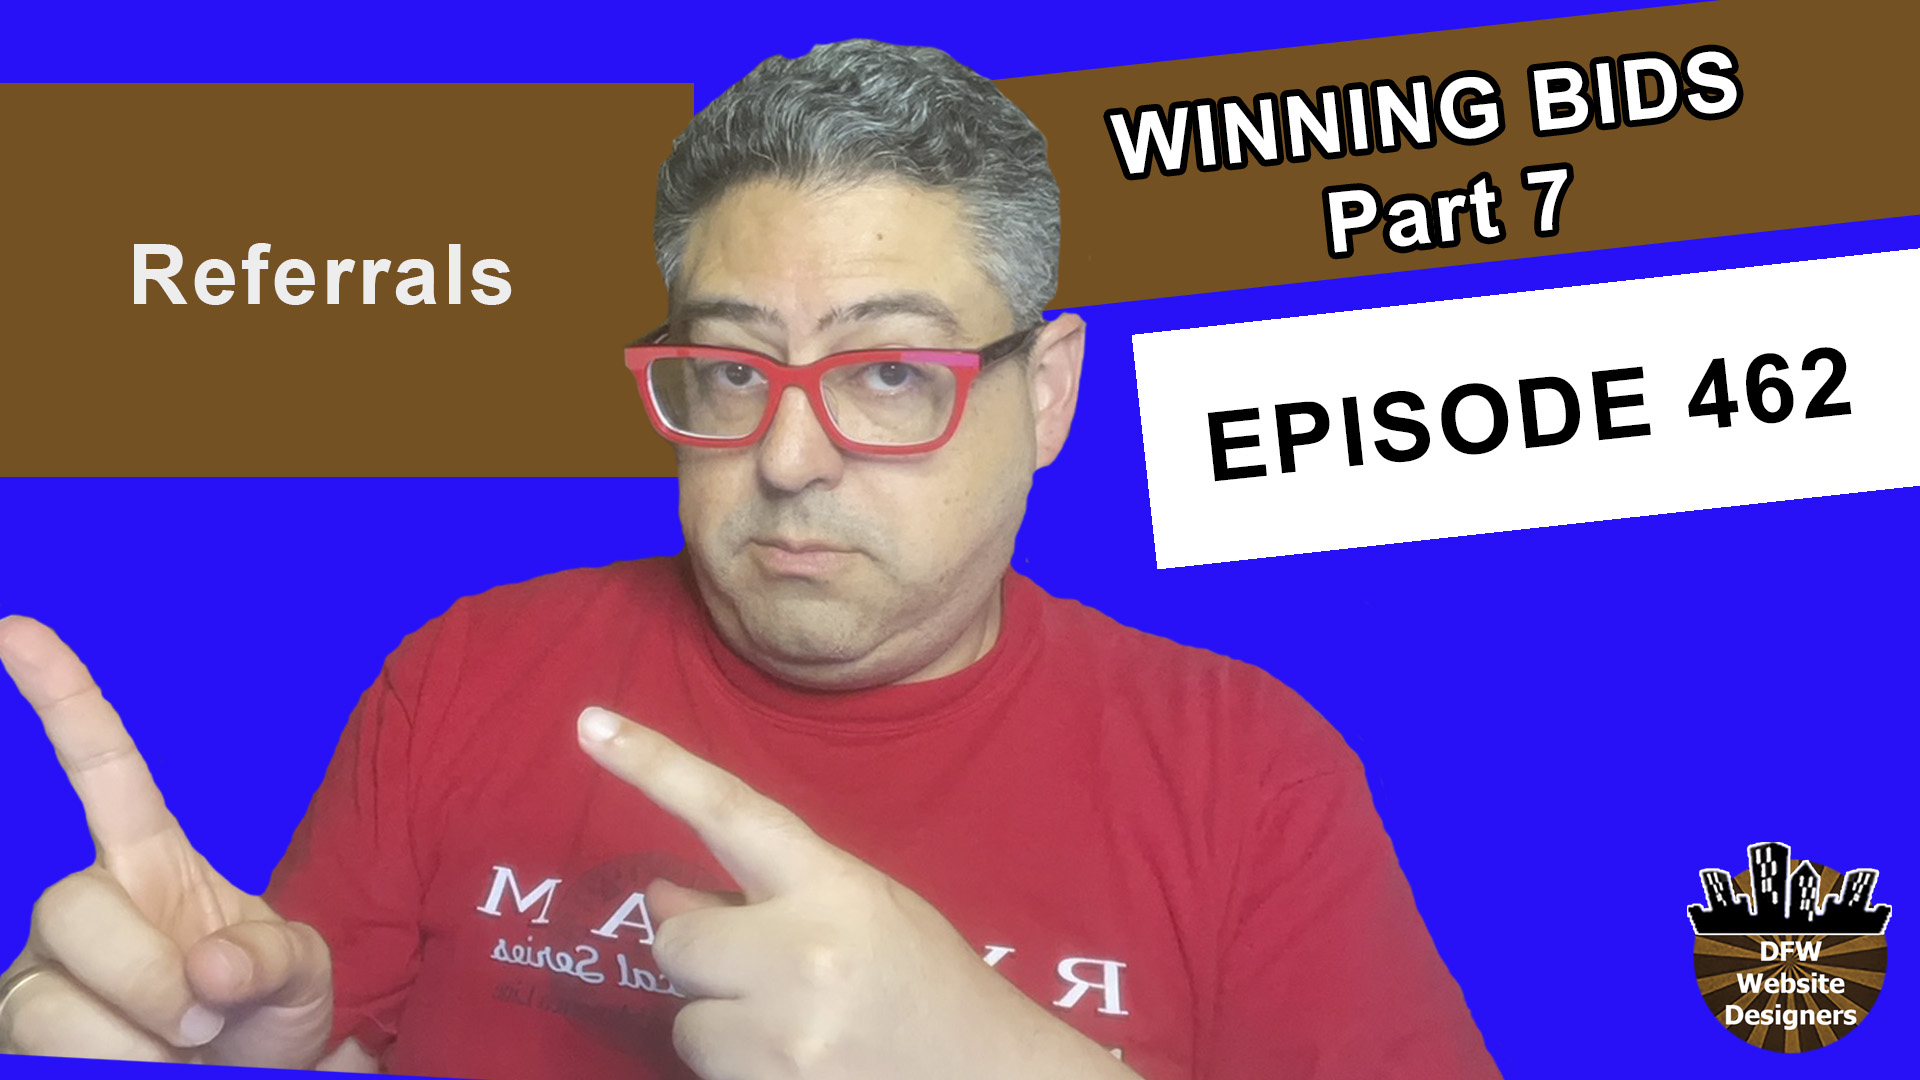 Episode 462 Winning Bids Part 7 Referrals:  Study, Continuous Improvement Next One